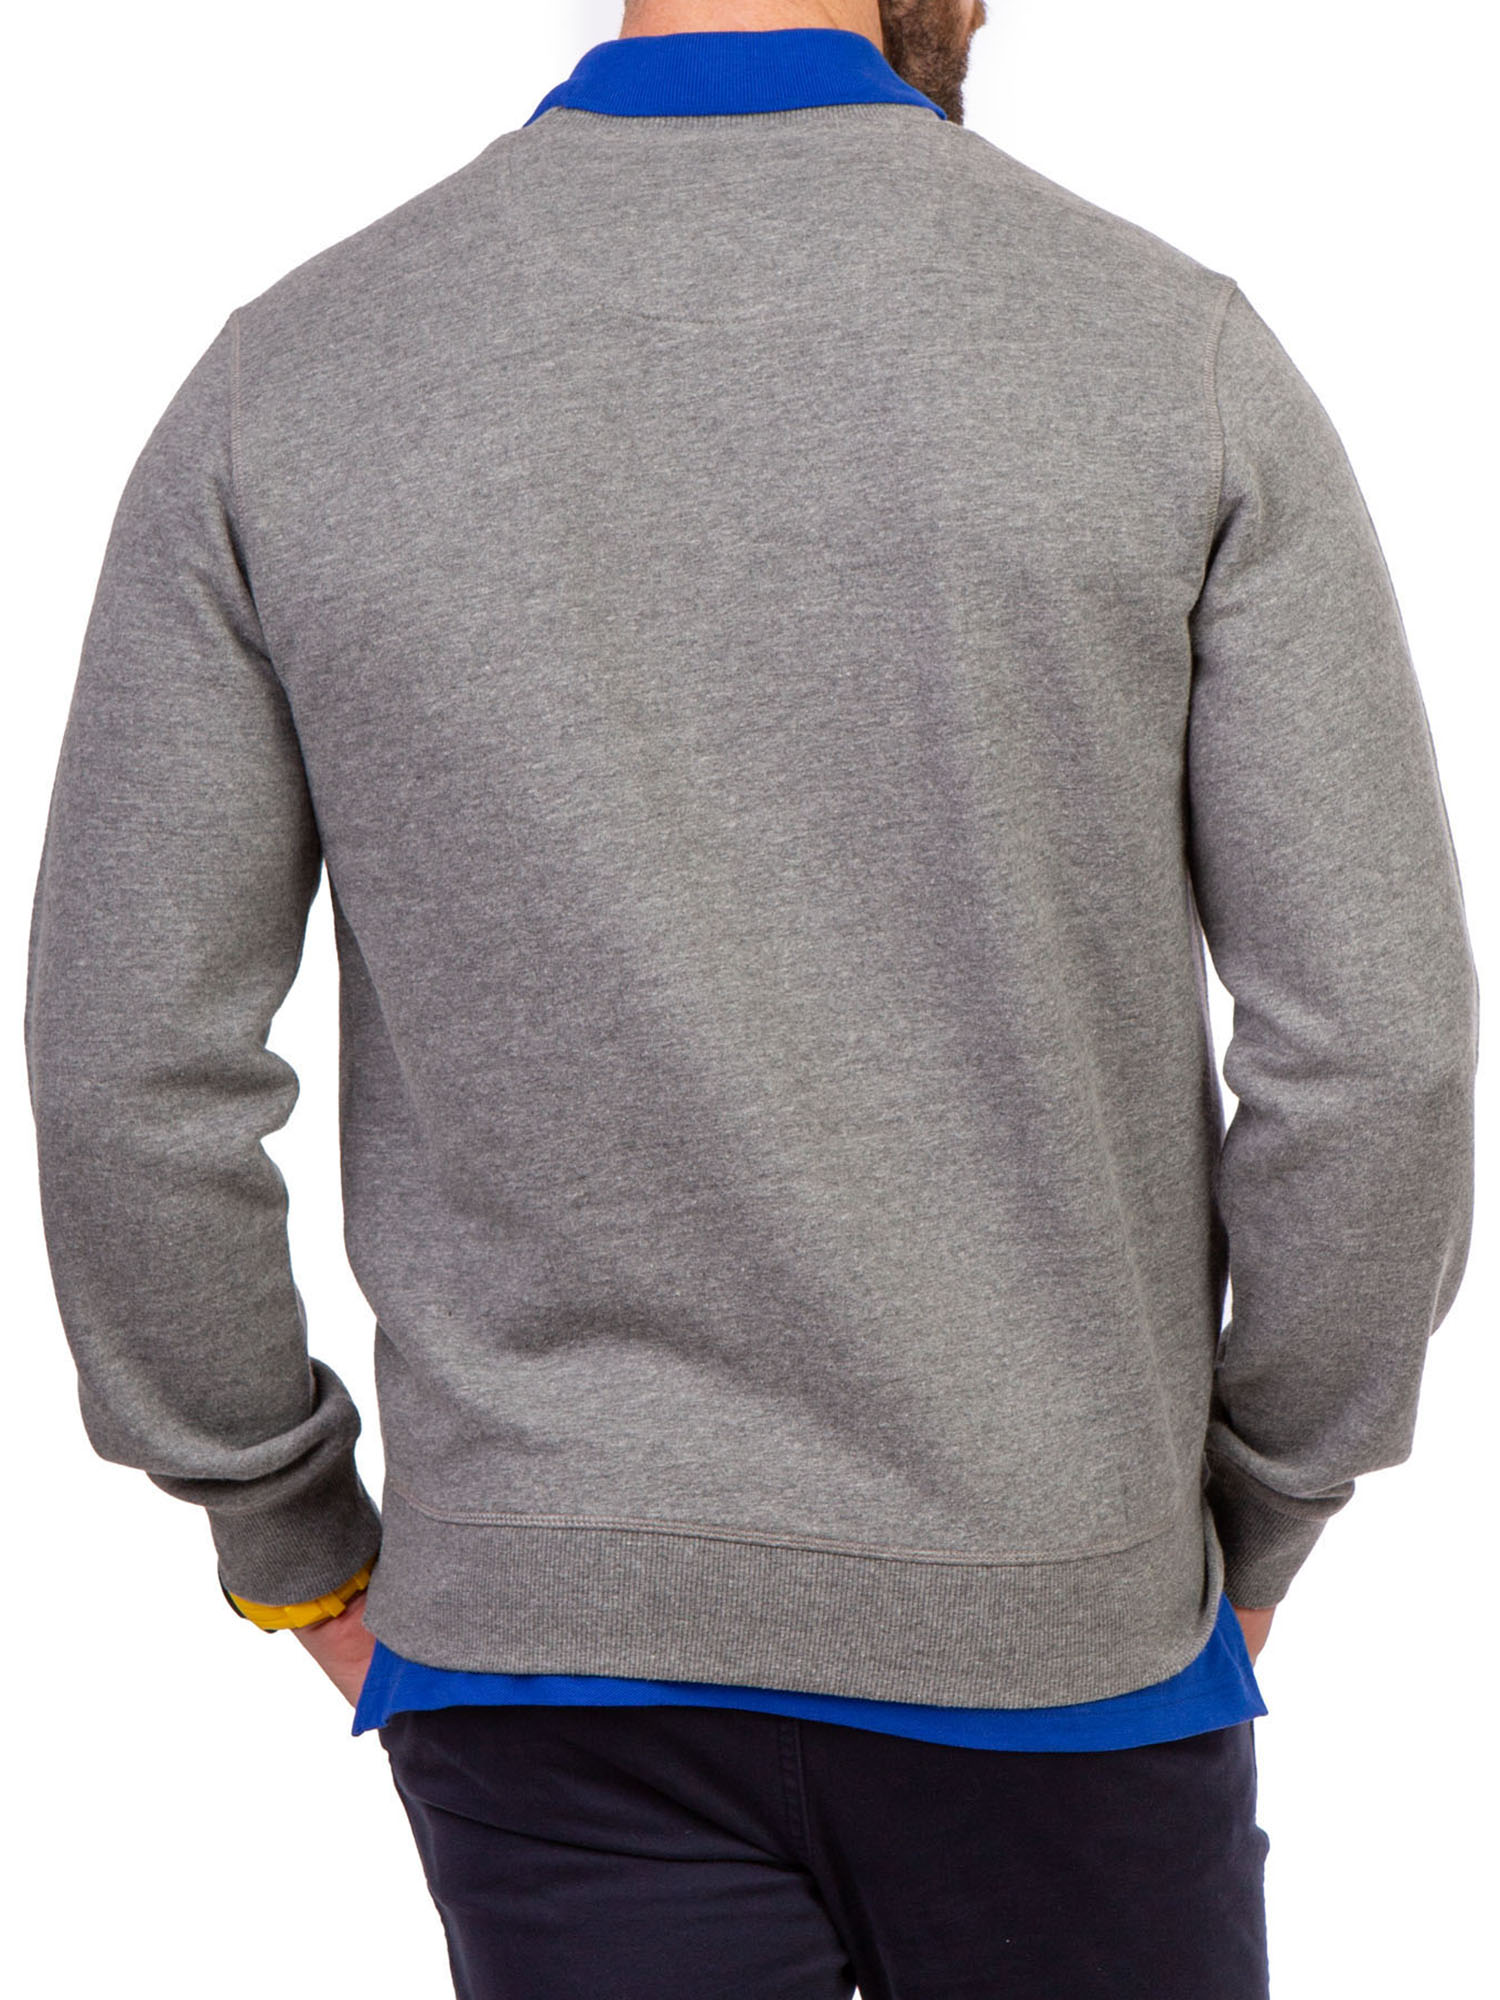 U.S. Polo Assn. Men's Knit Sweater Shirt - image 3 of 4